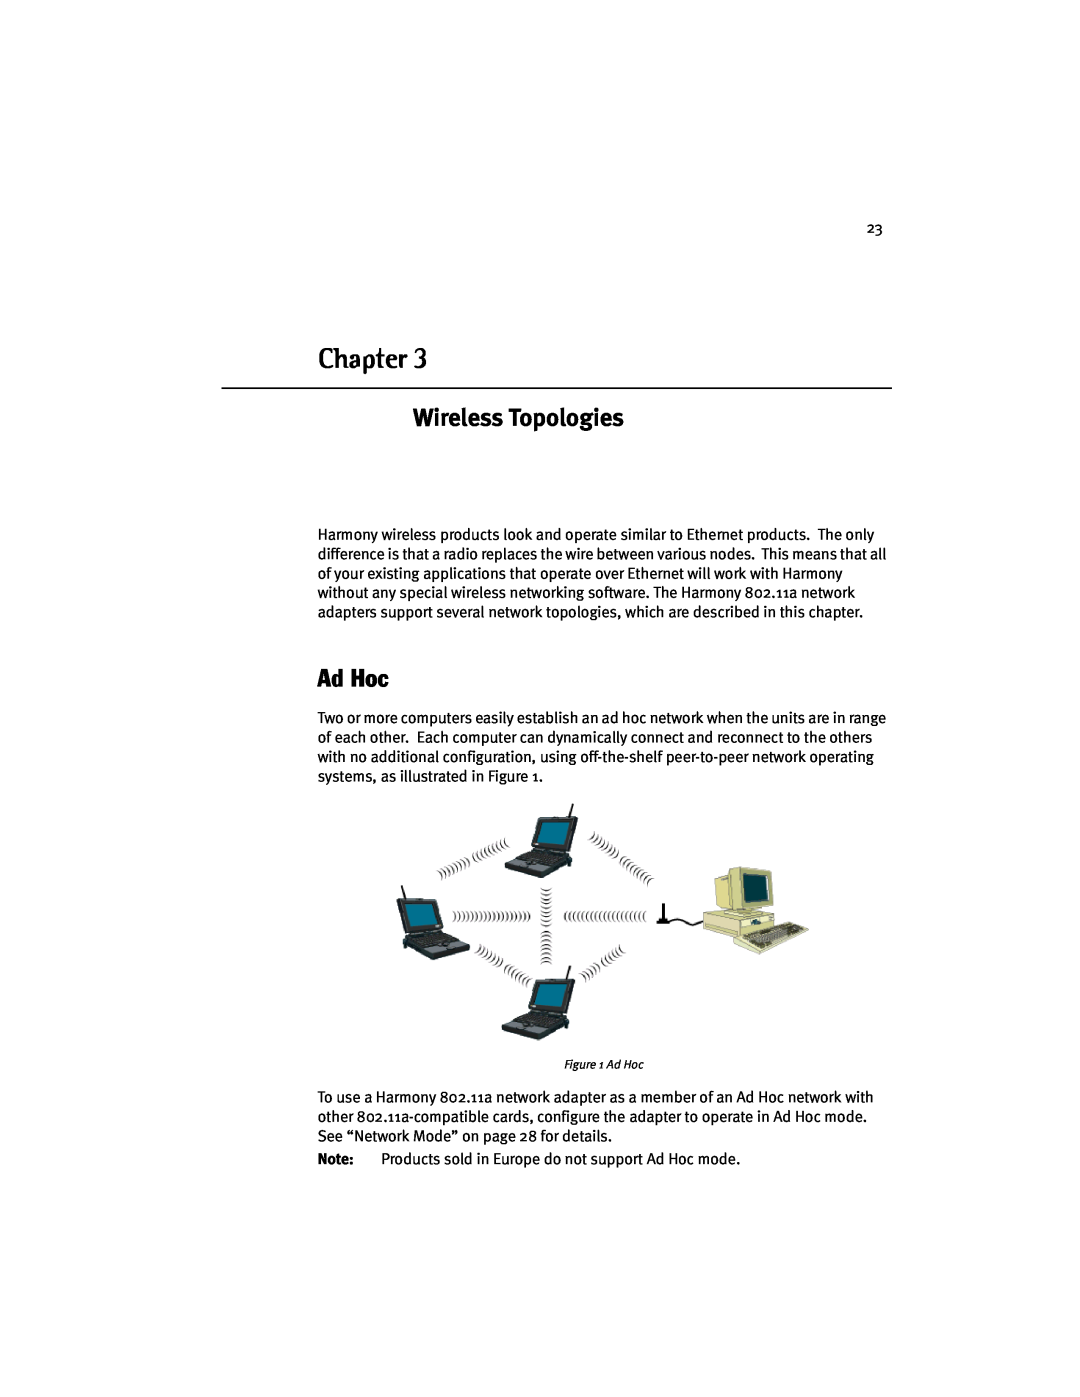 Harmony House 802.11a manual Wireless Topologies, Ad Hoc, Chapter 